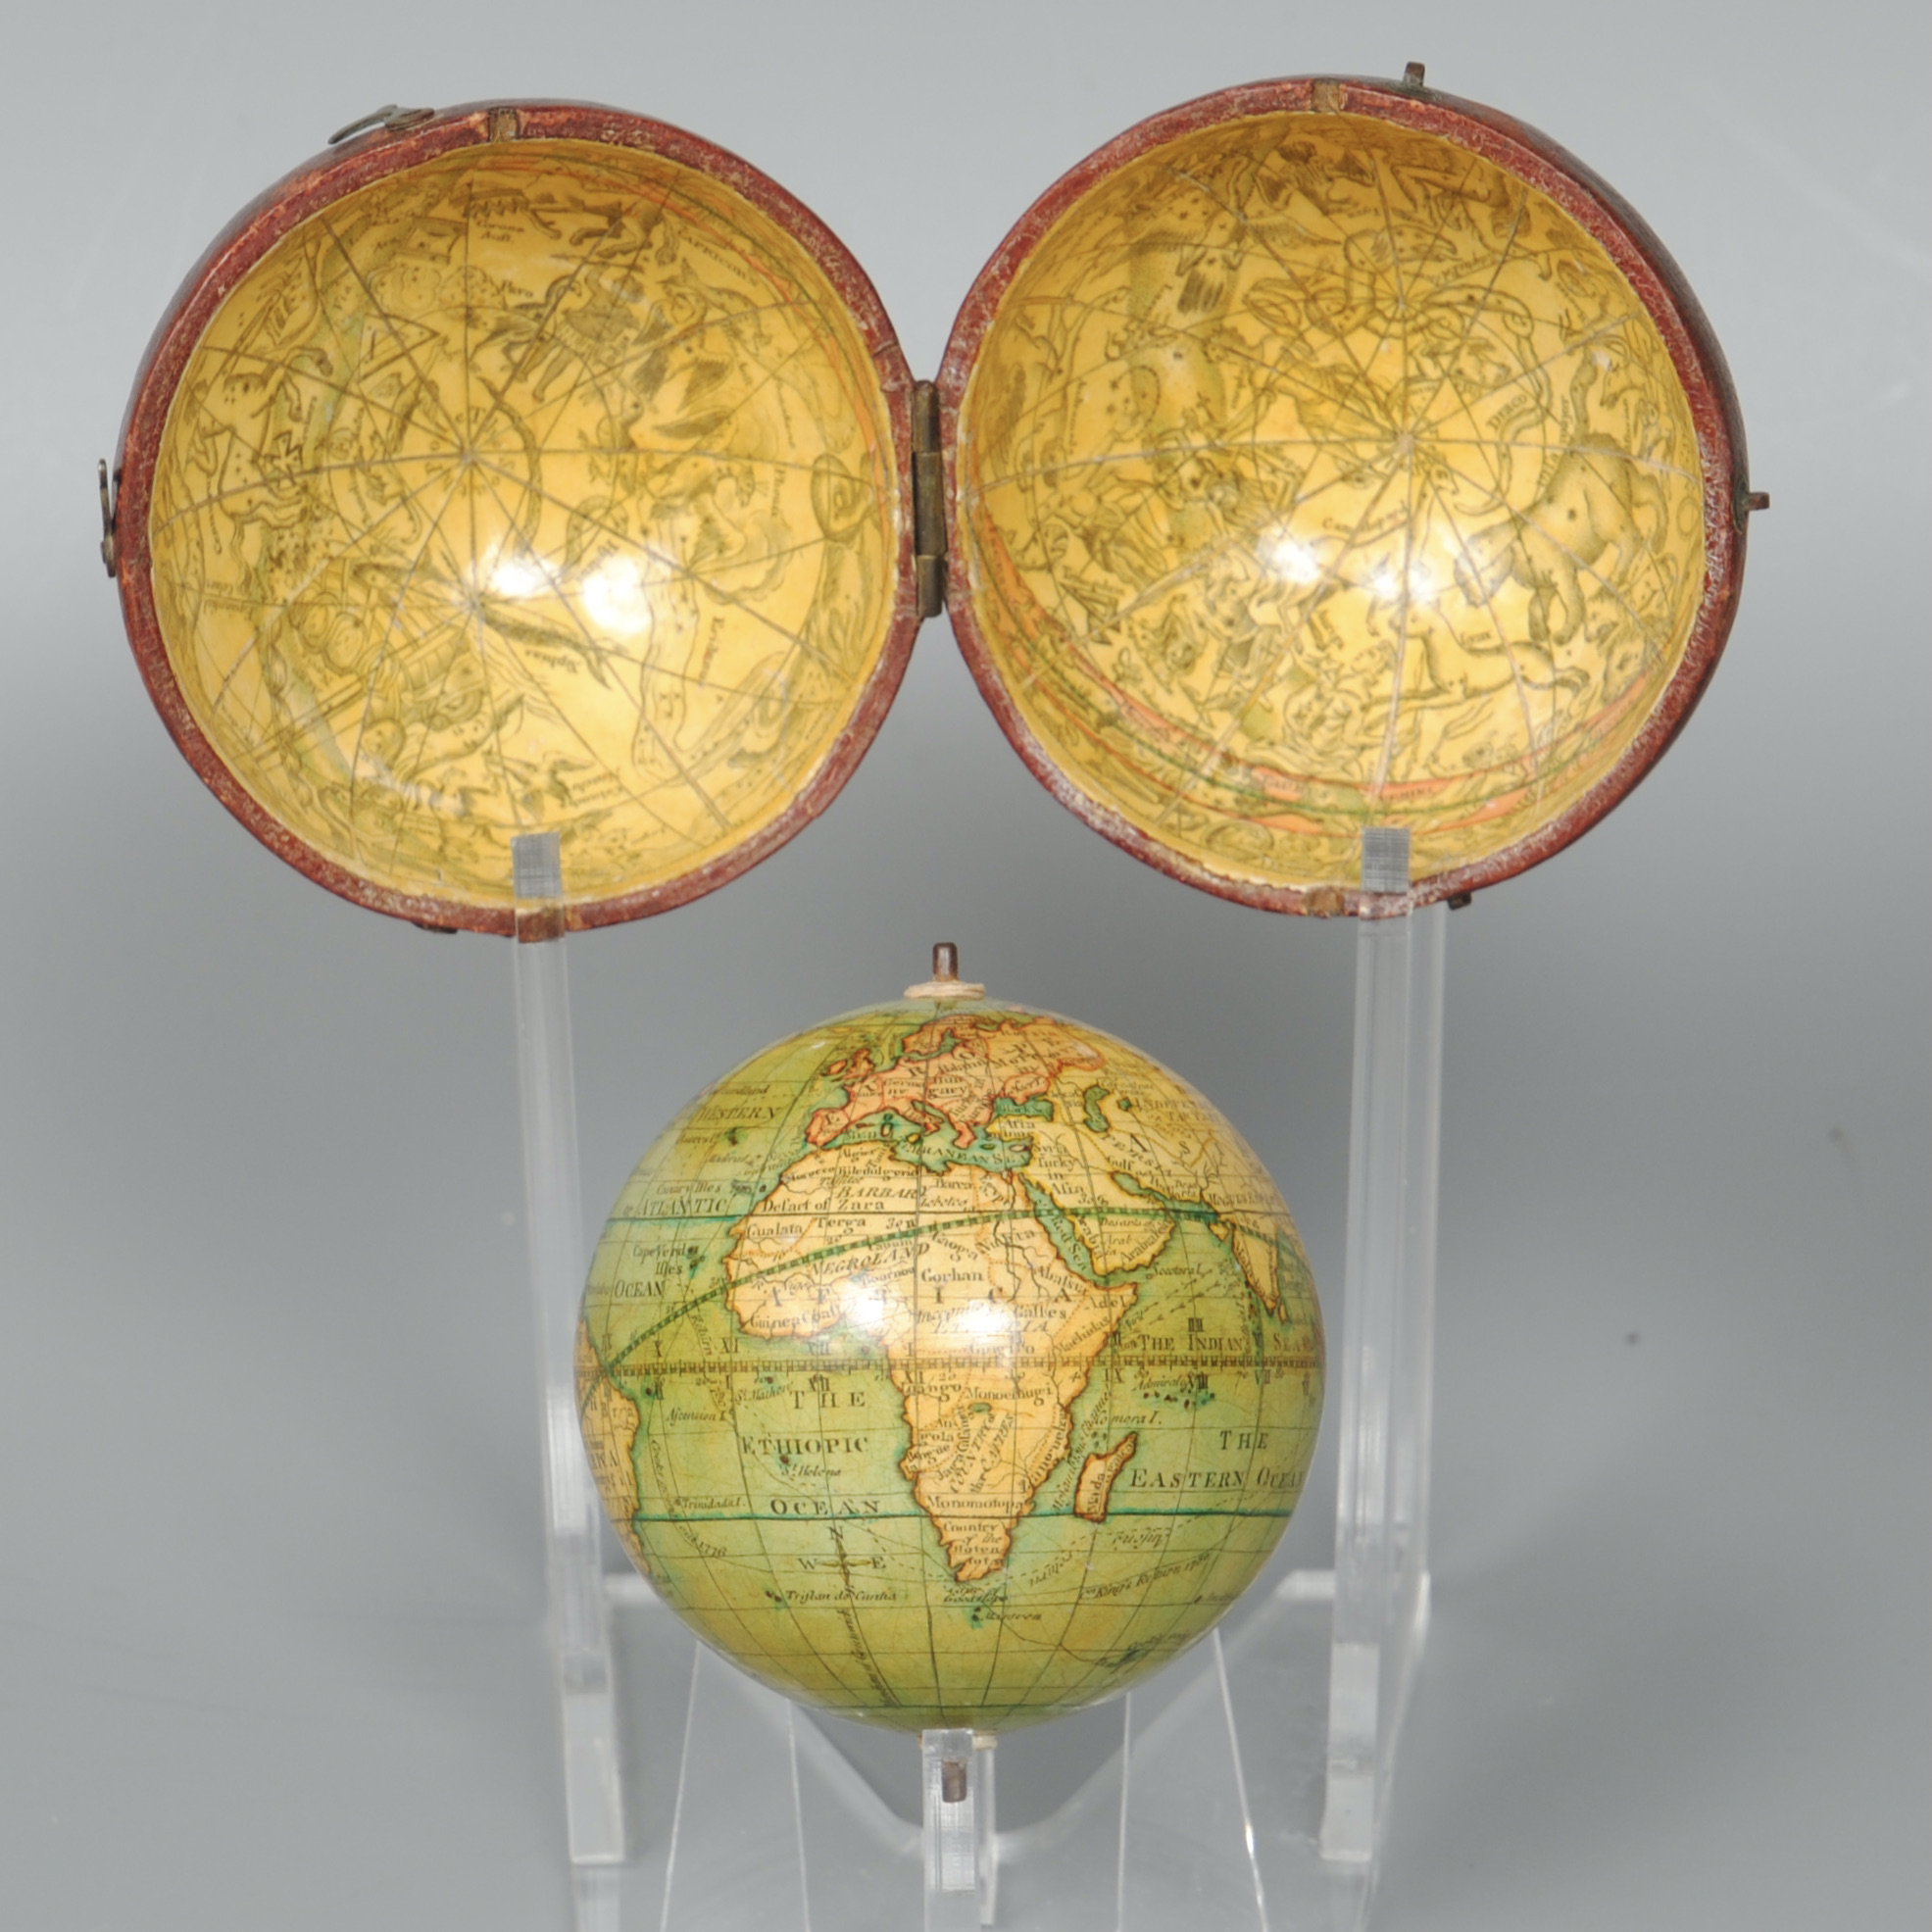 Fine example of a Lane pocket globe